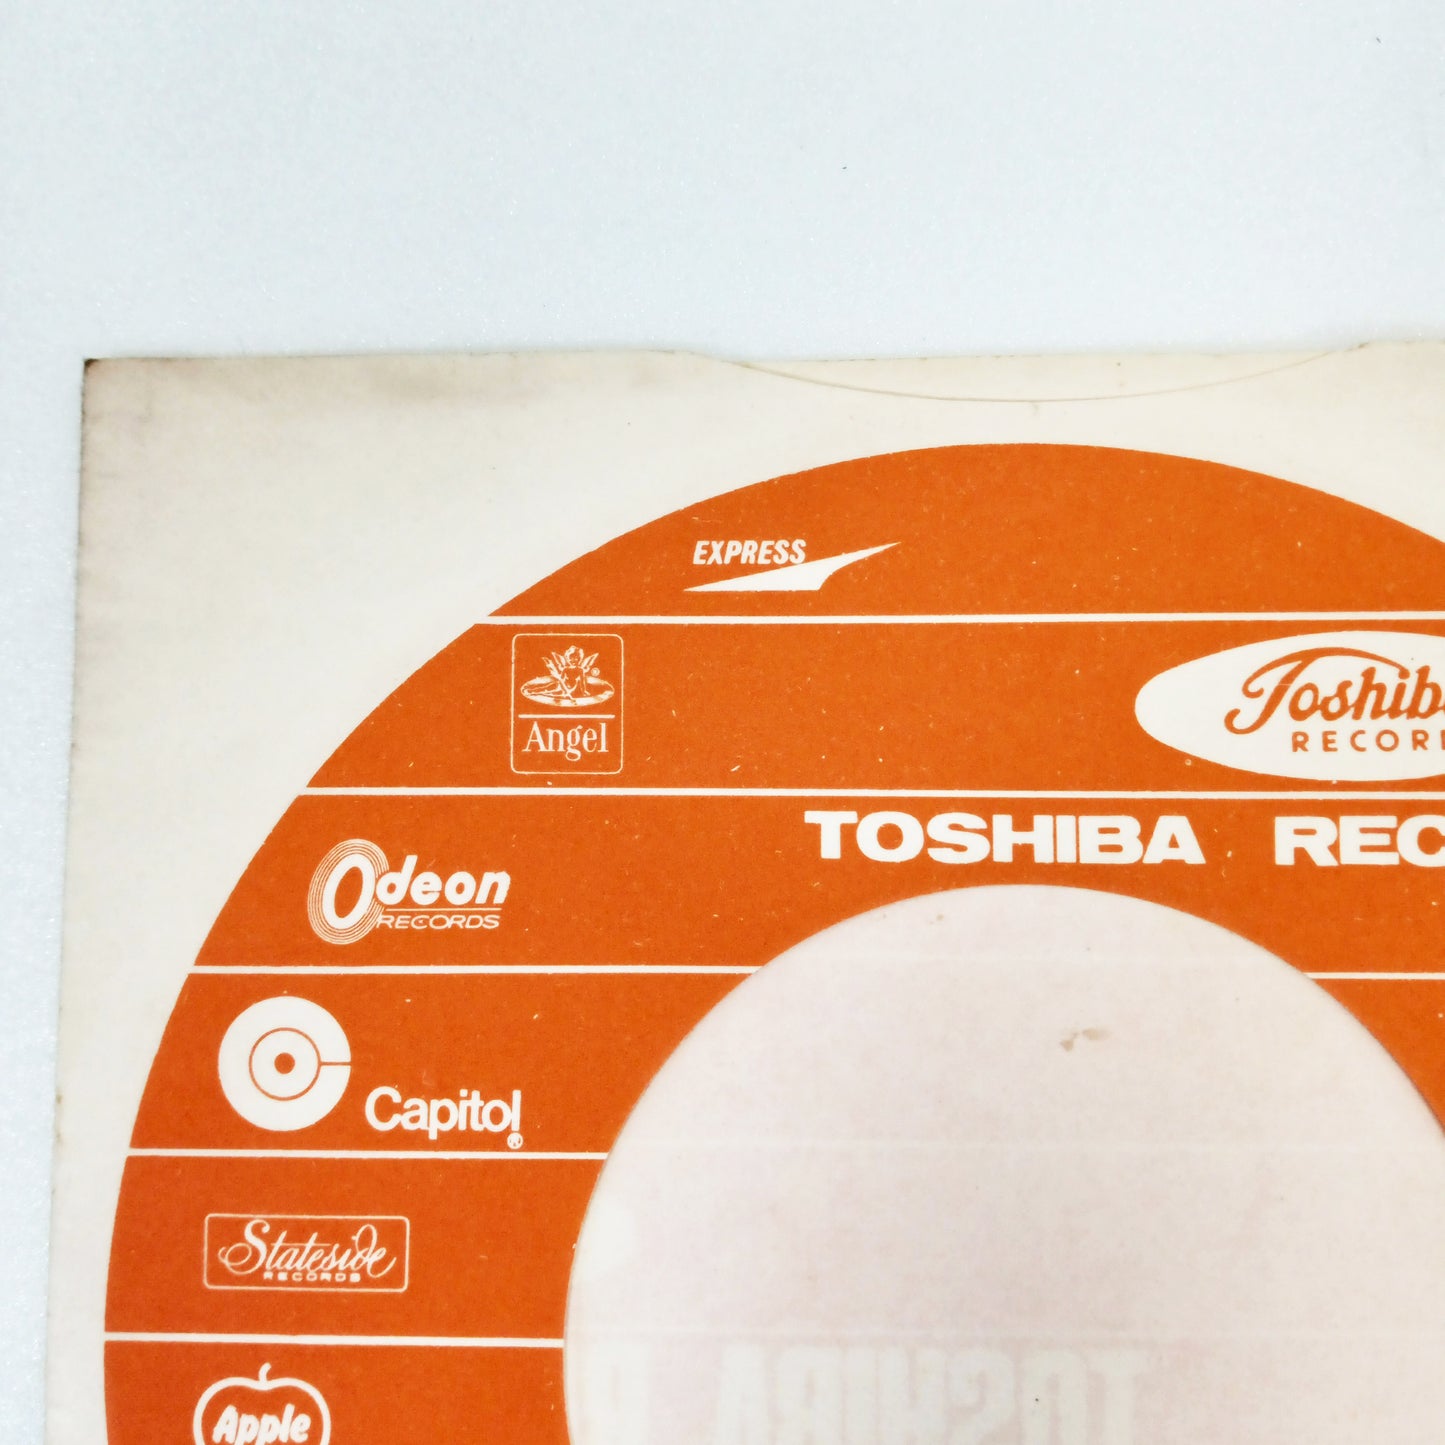 1971 Bride Norihiko Hashida Climax B: This Road Japanese record vintage